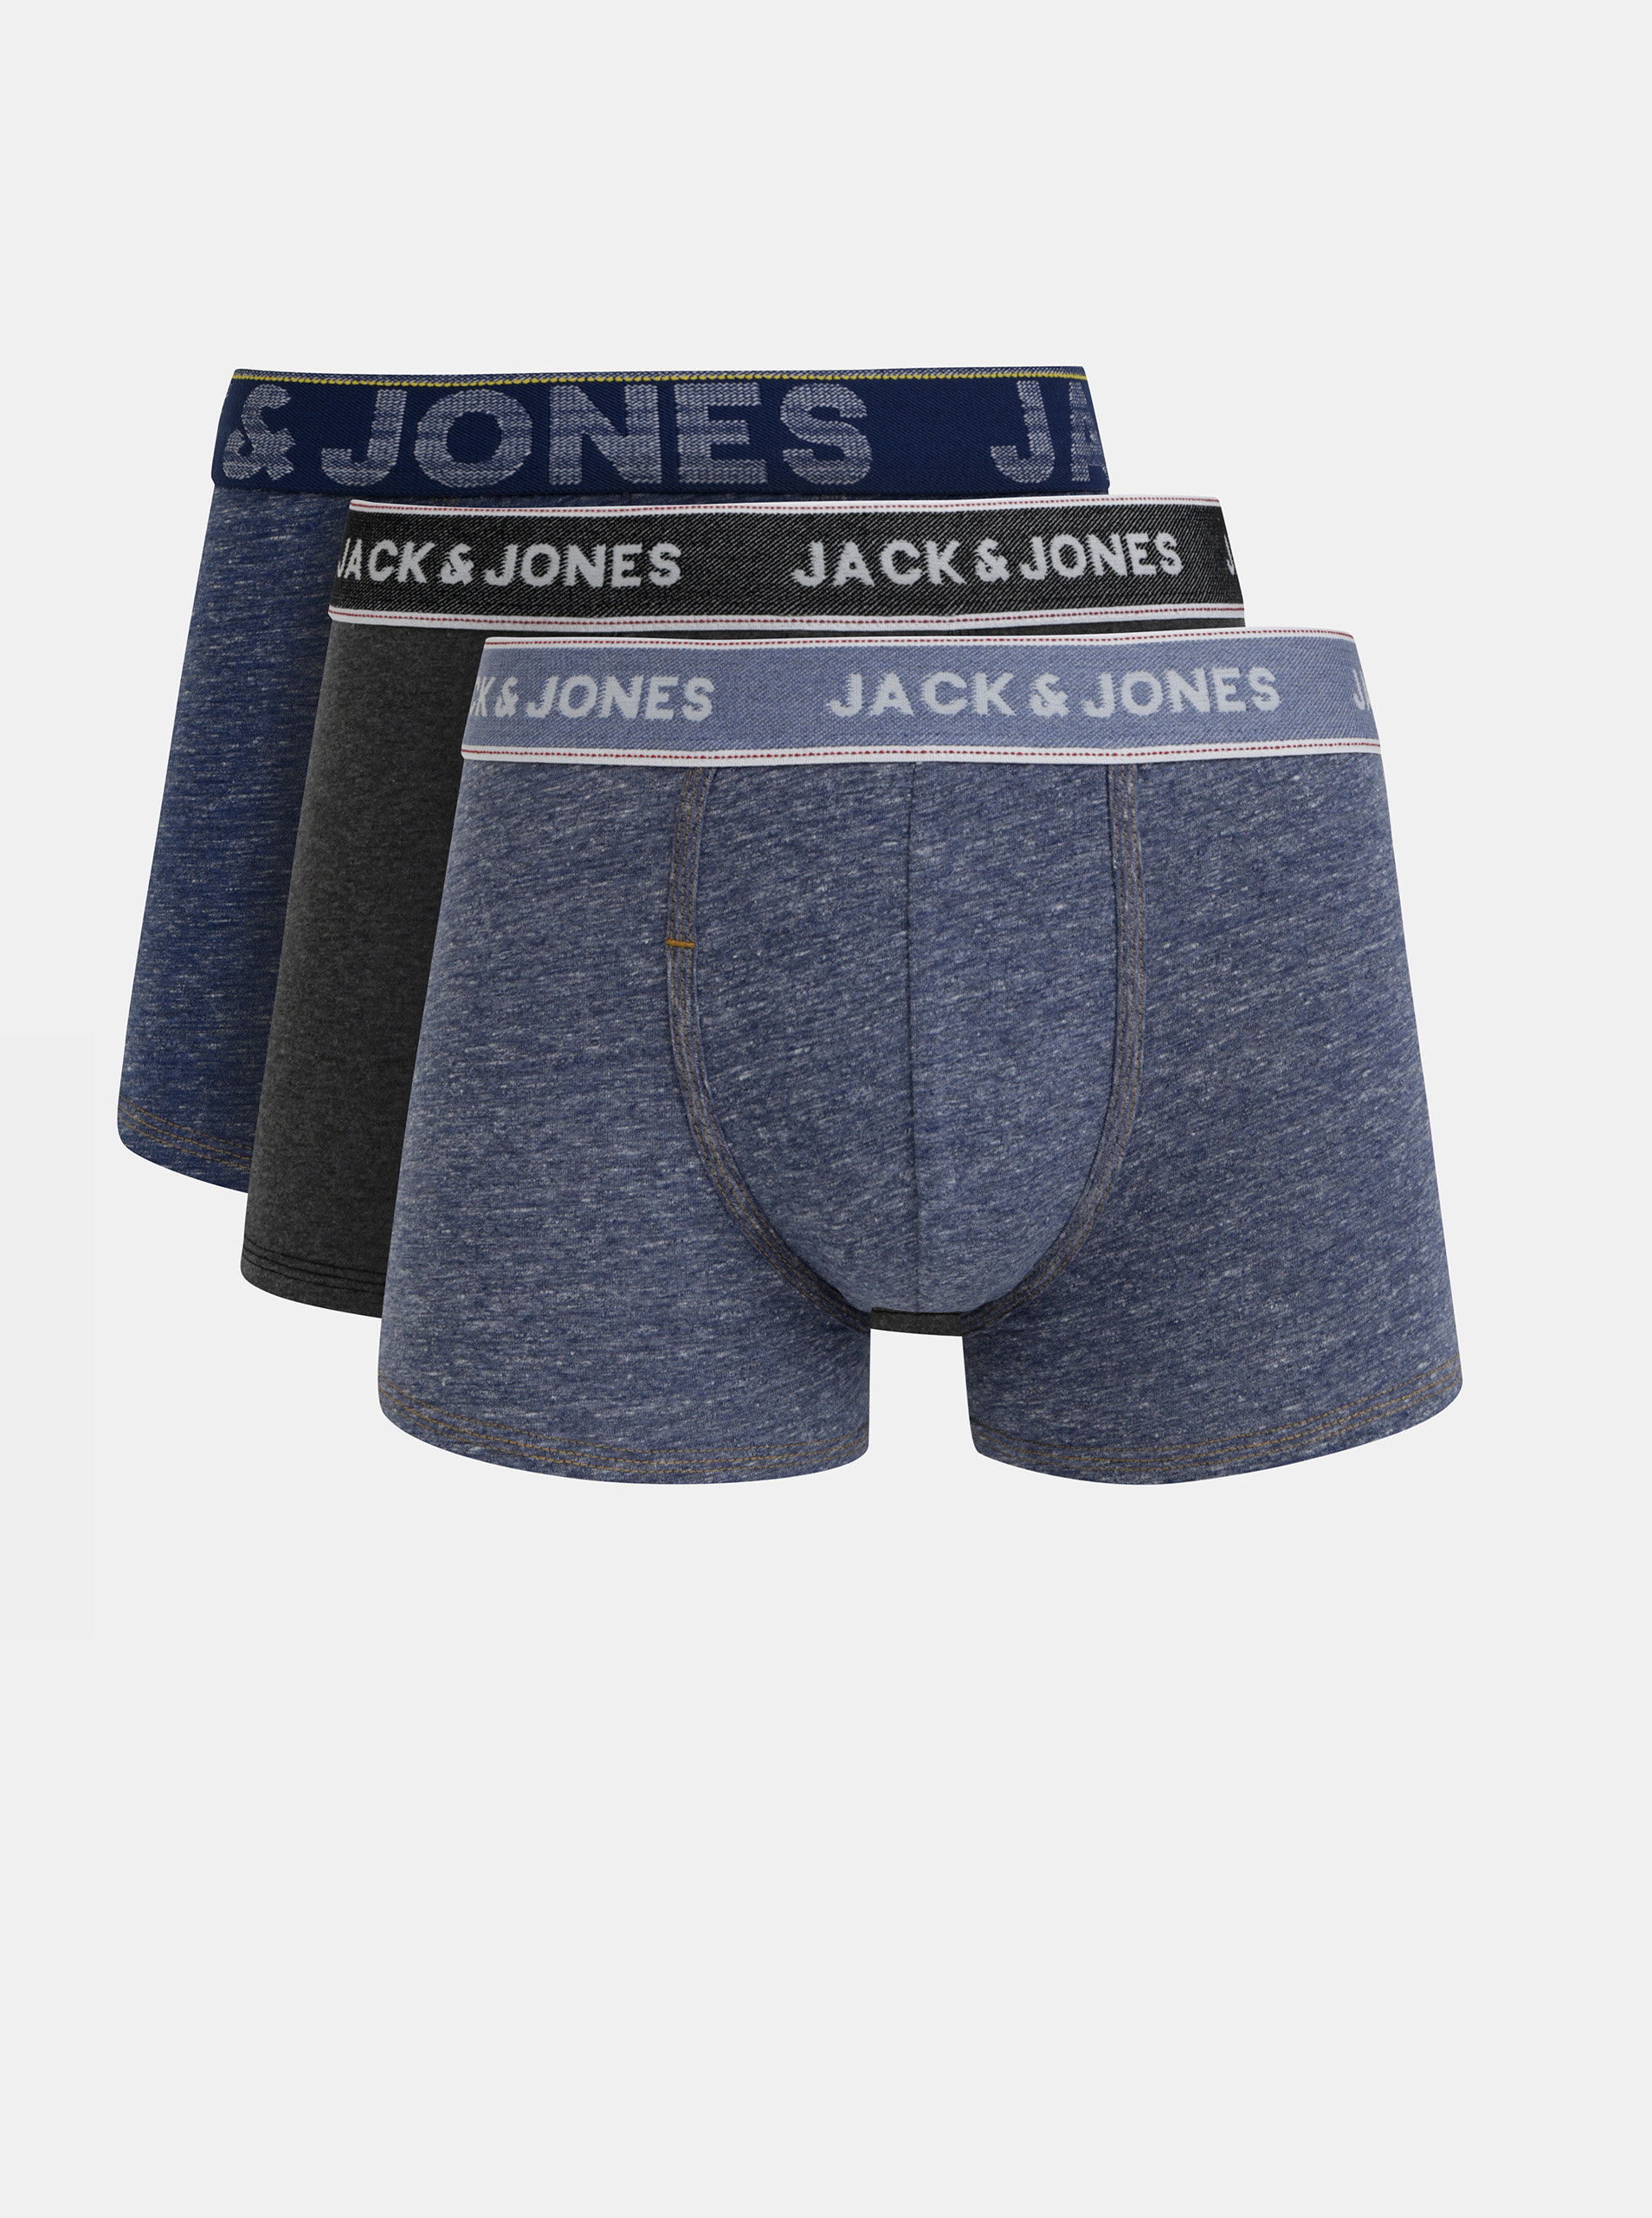 Fotografie Sada tří boxerek v modré a šedé barvě Jack & Jones Denim